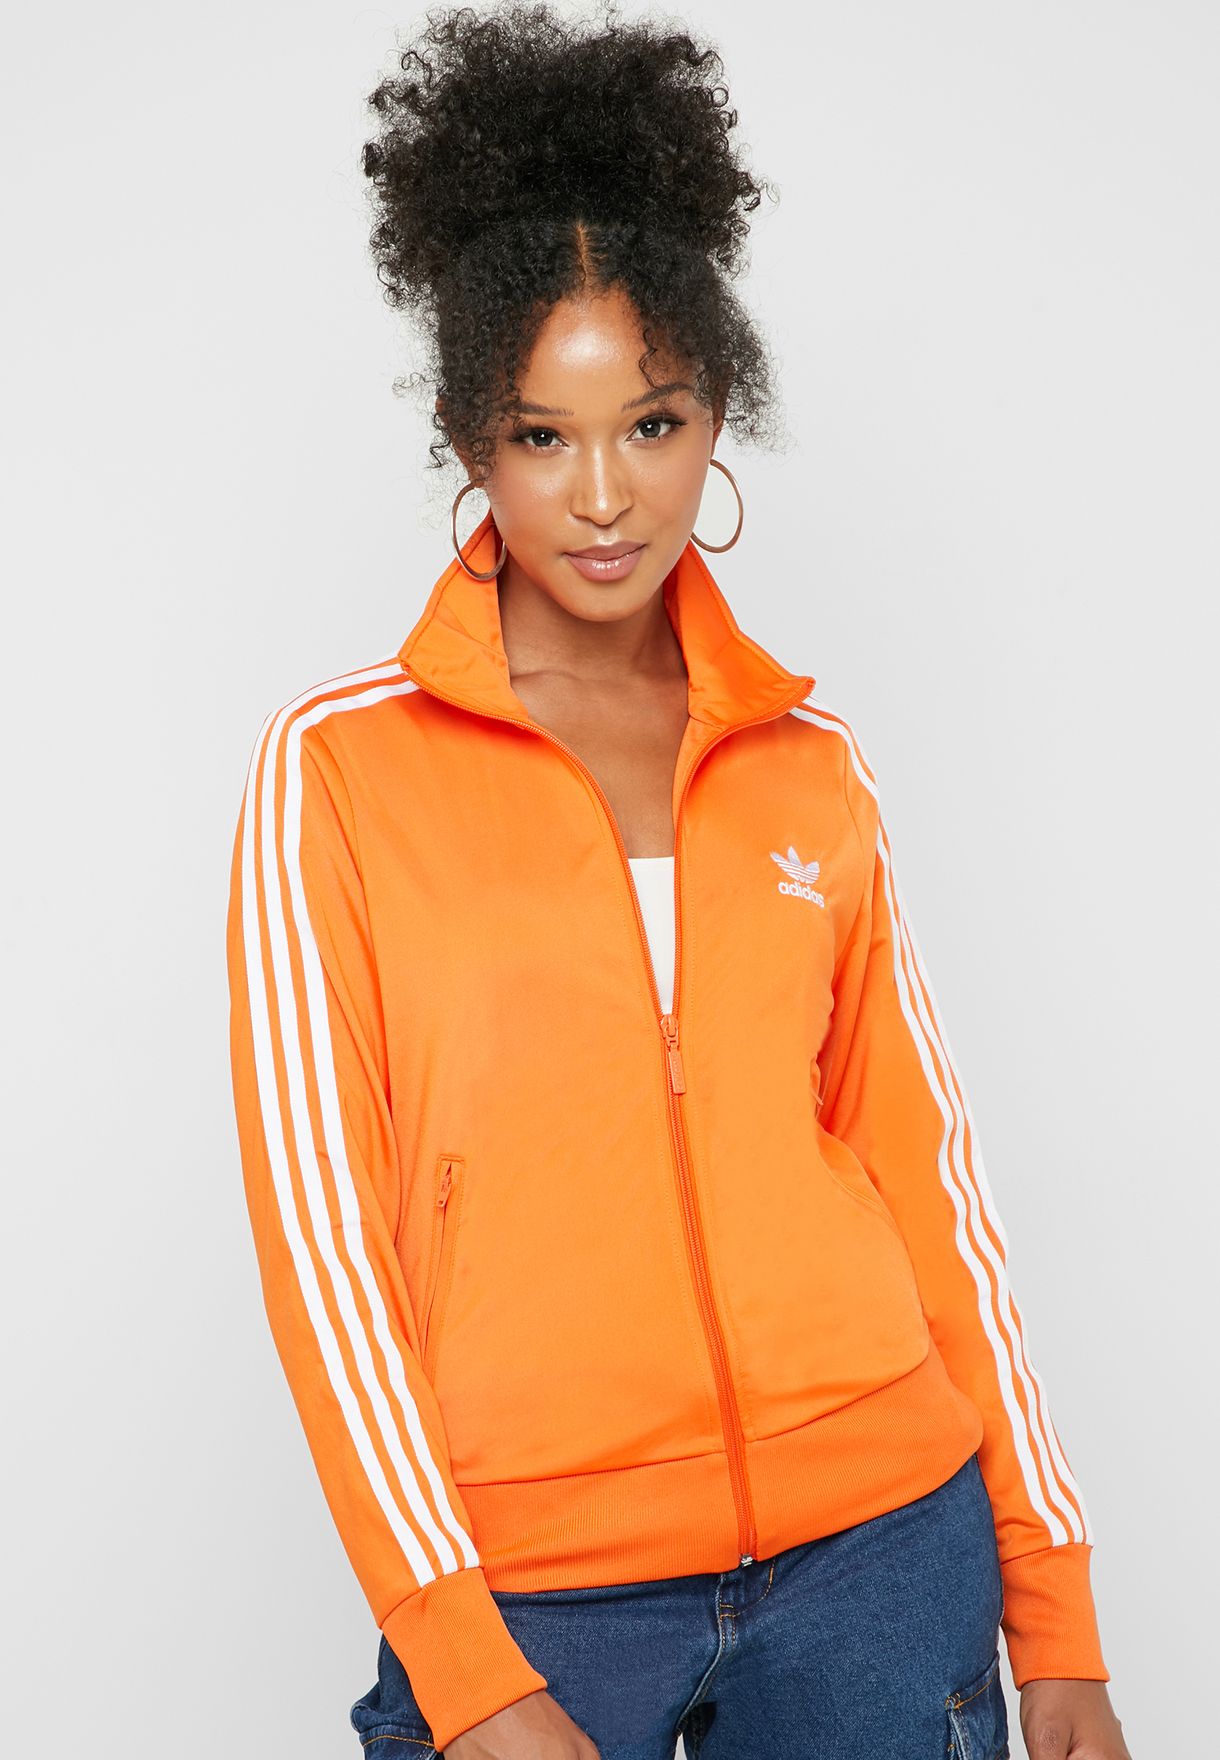 orange adidas outfit women's